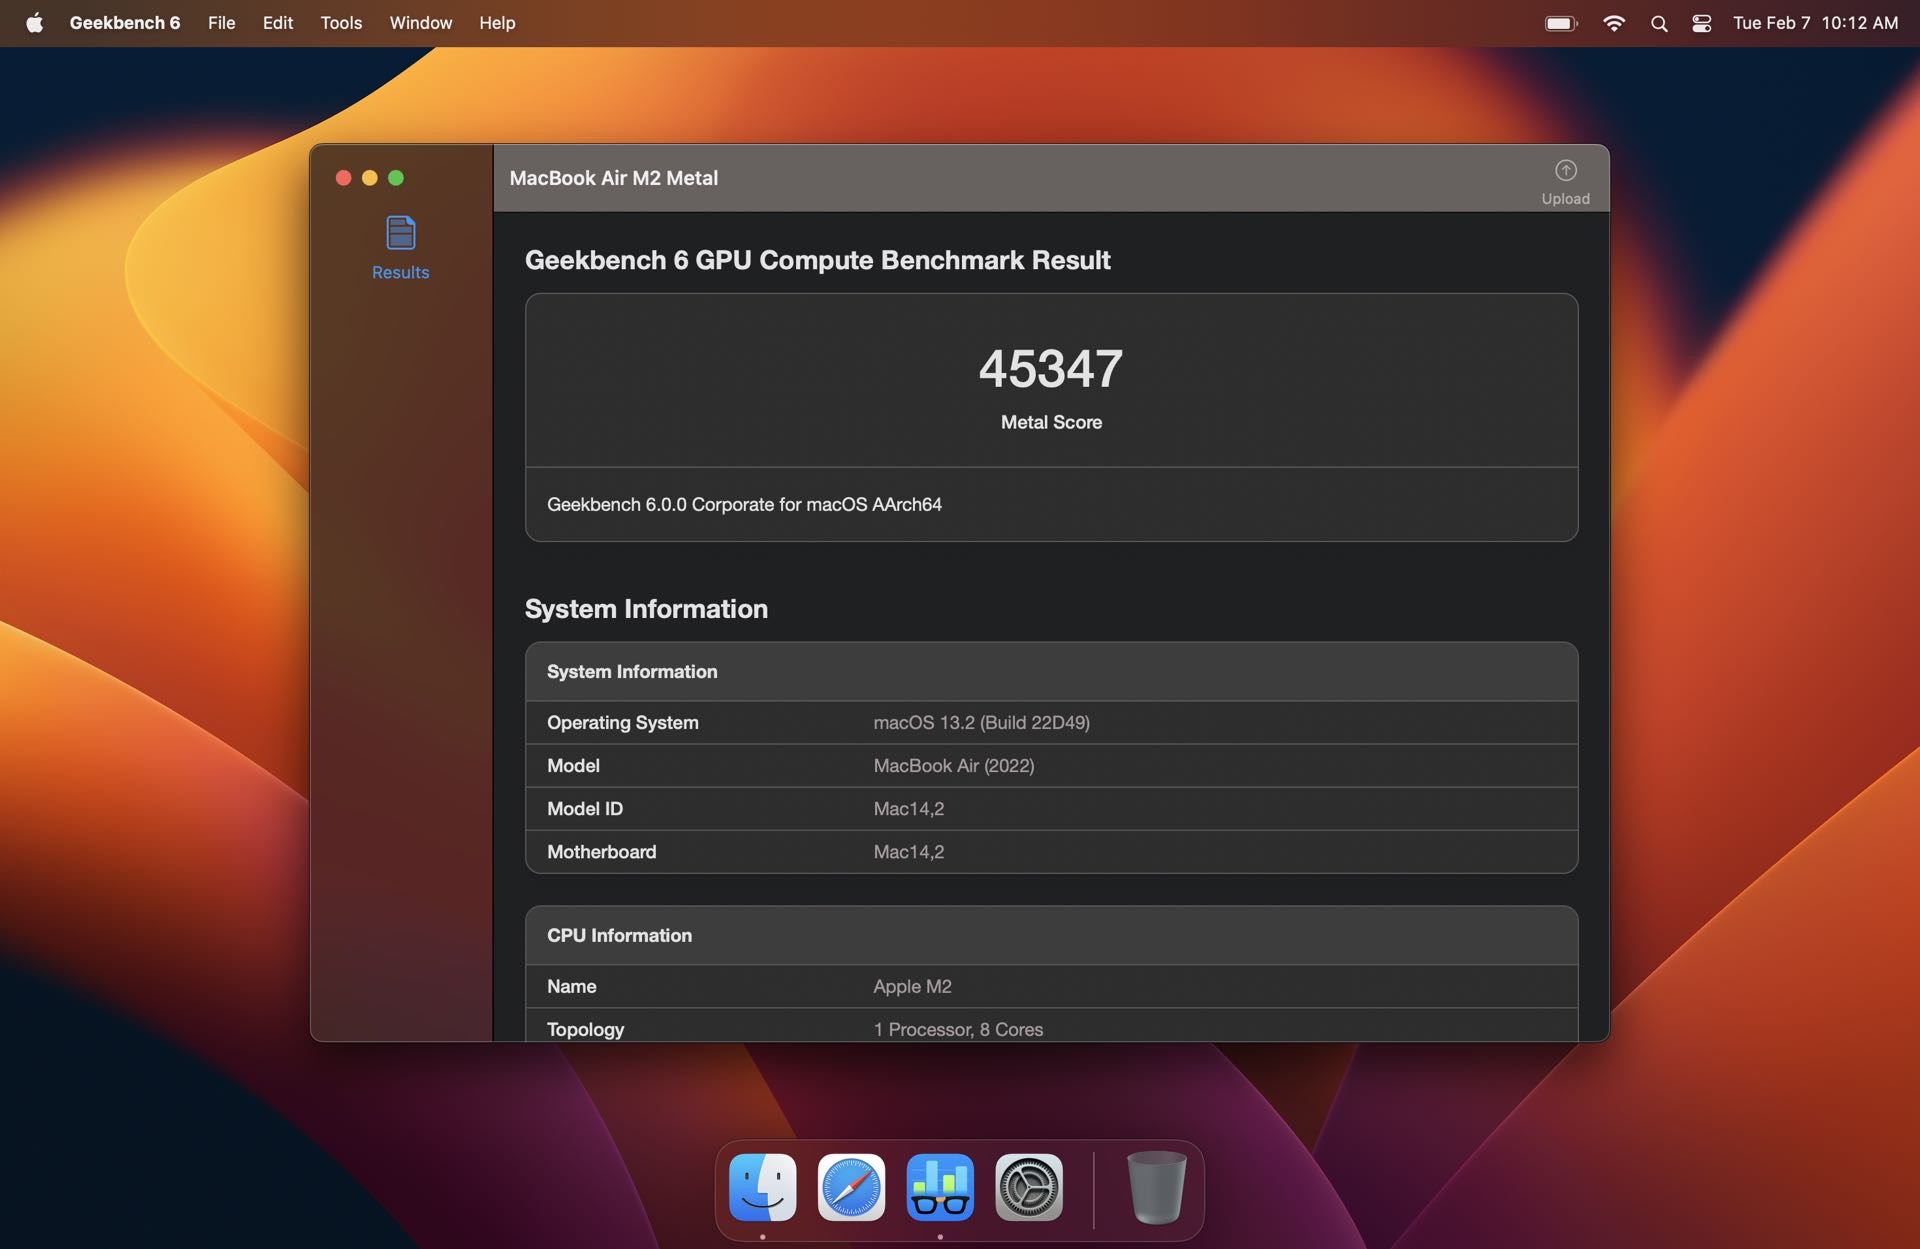 Geekbench 6 running on macOS.